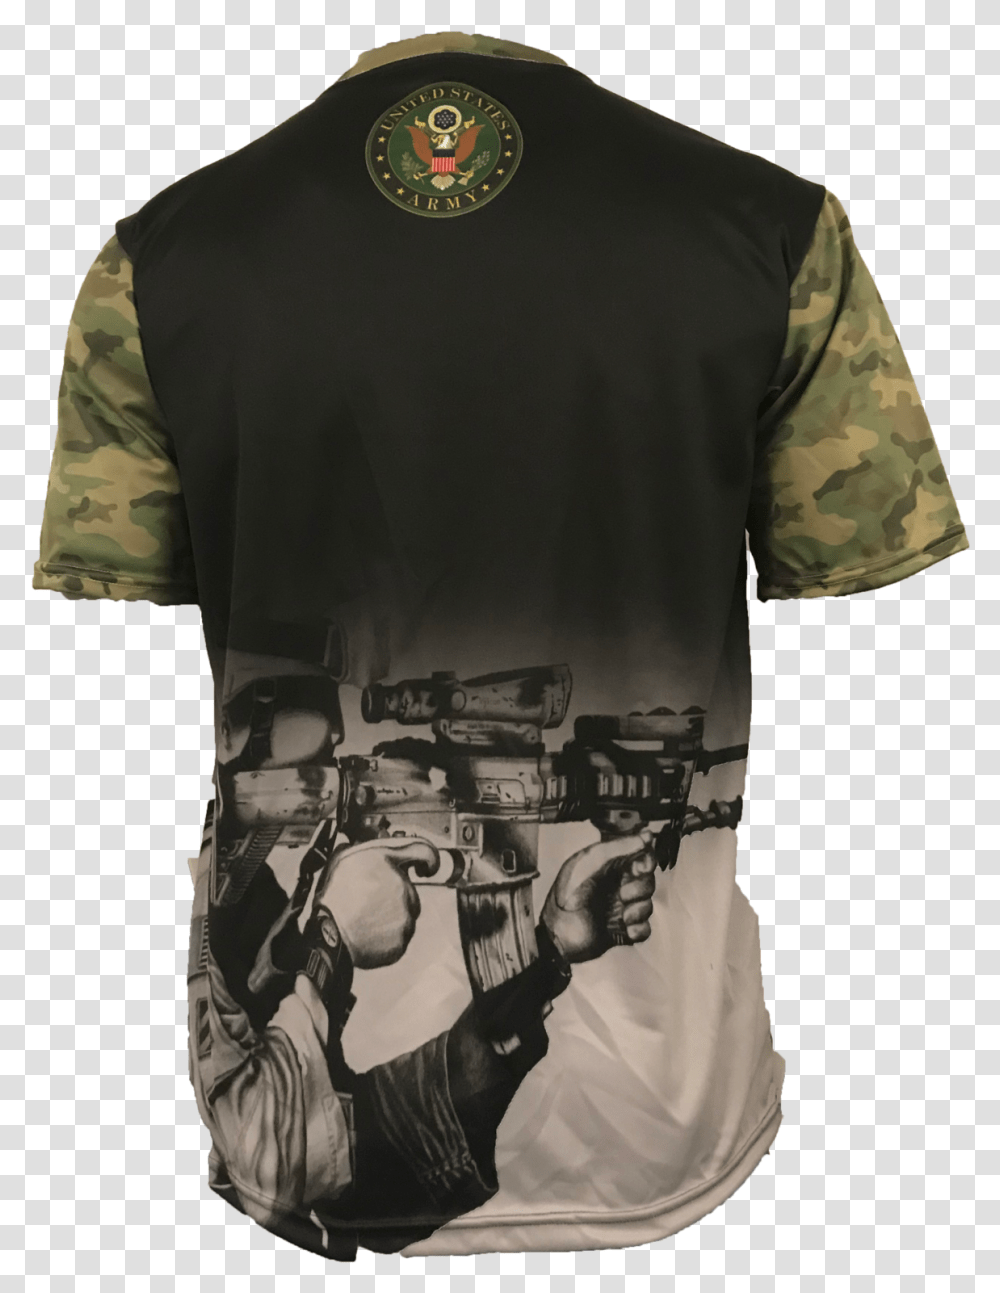 Evo Army Star Text Shirt Illustration, Clothing, Apparel, Sleeve, T-Shirt Transparent Png